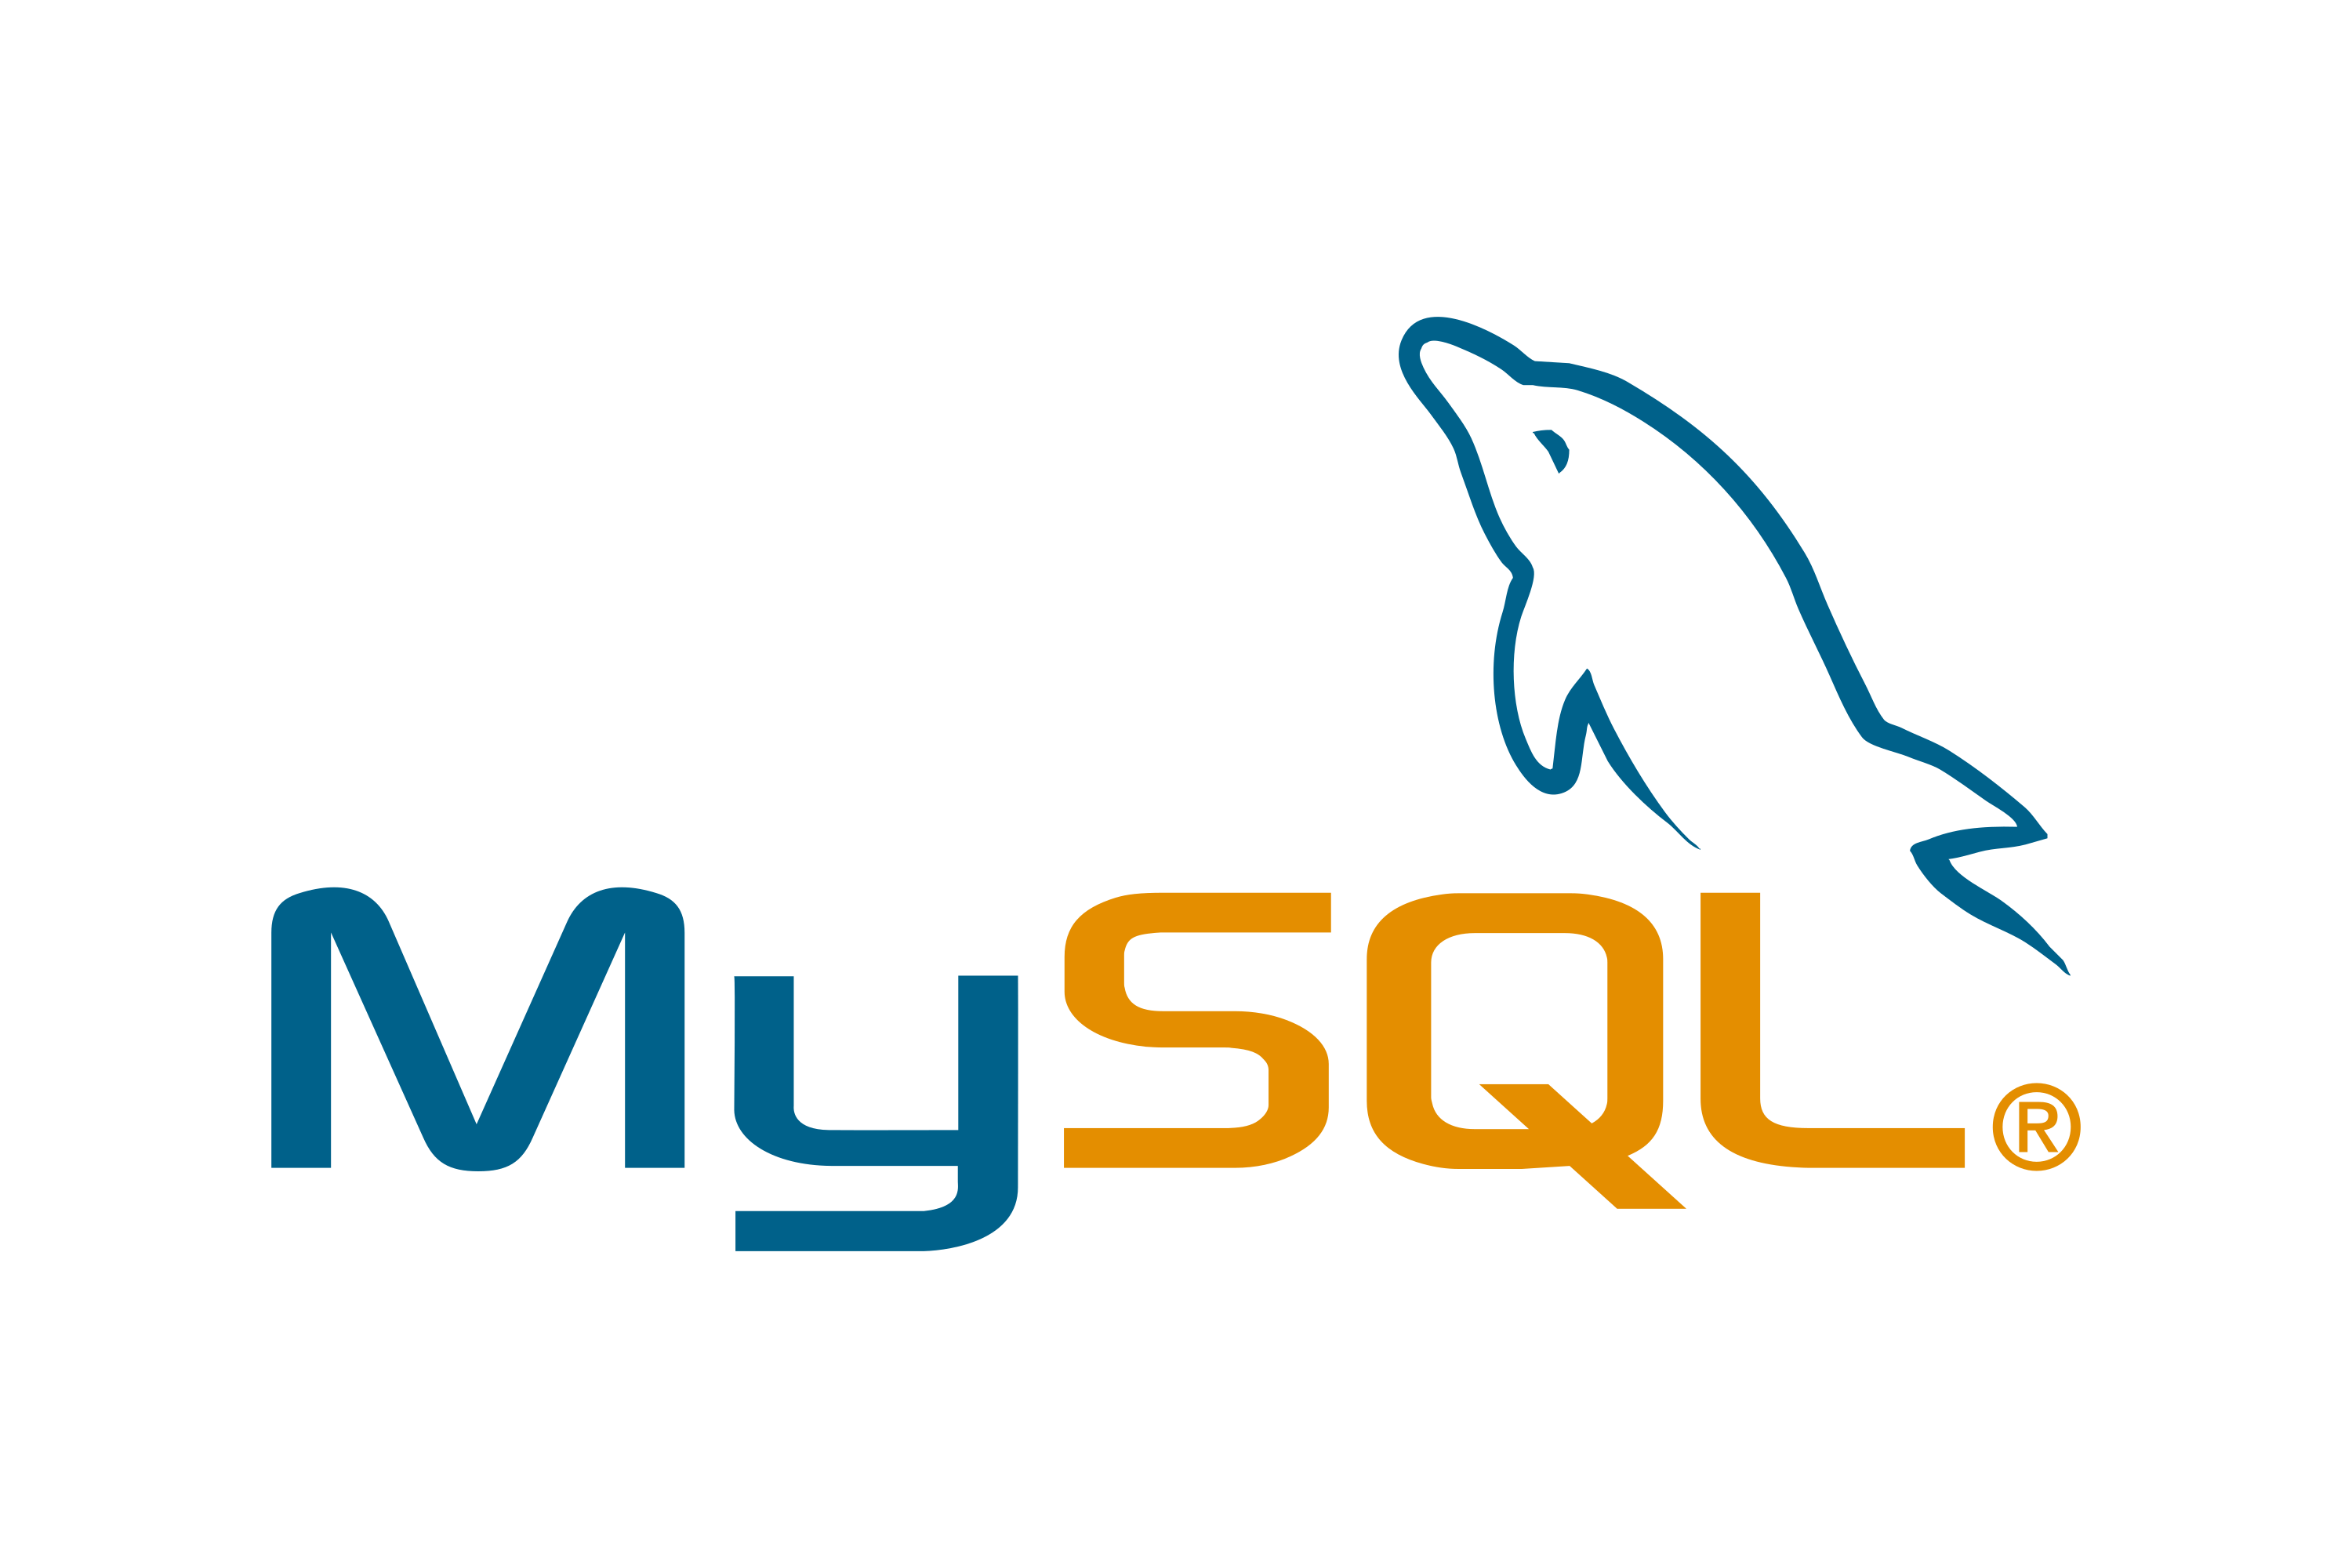 MySQL.png